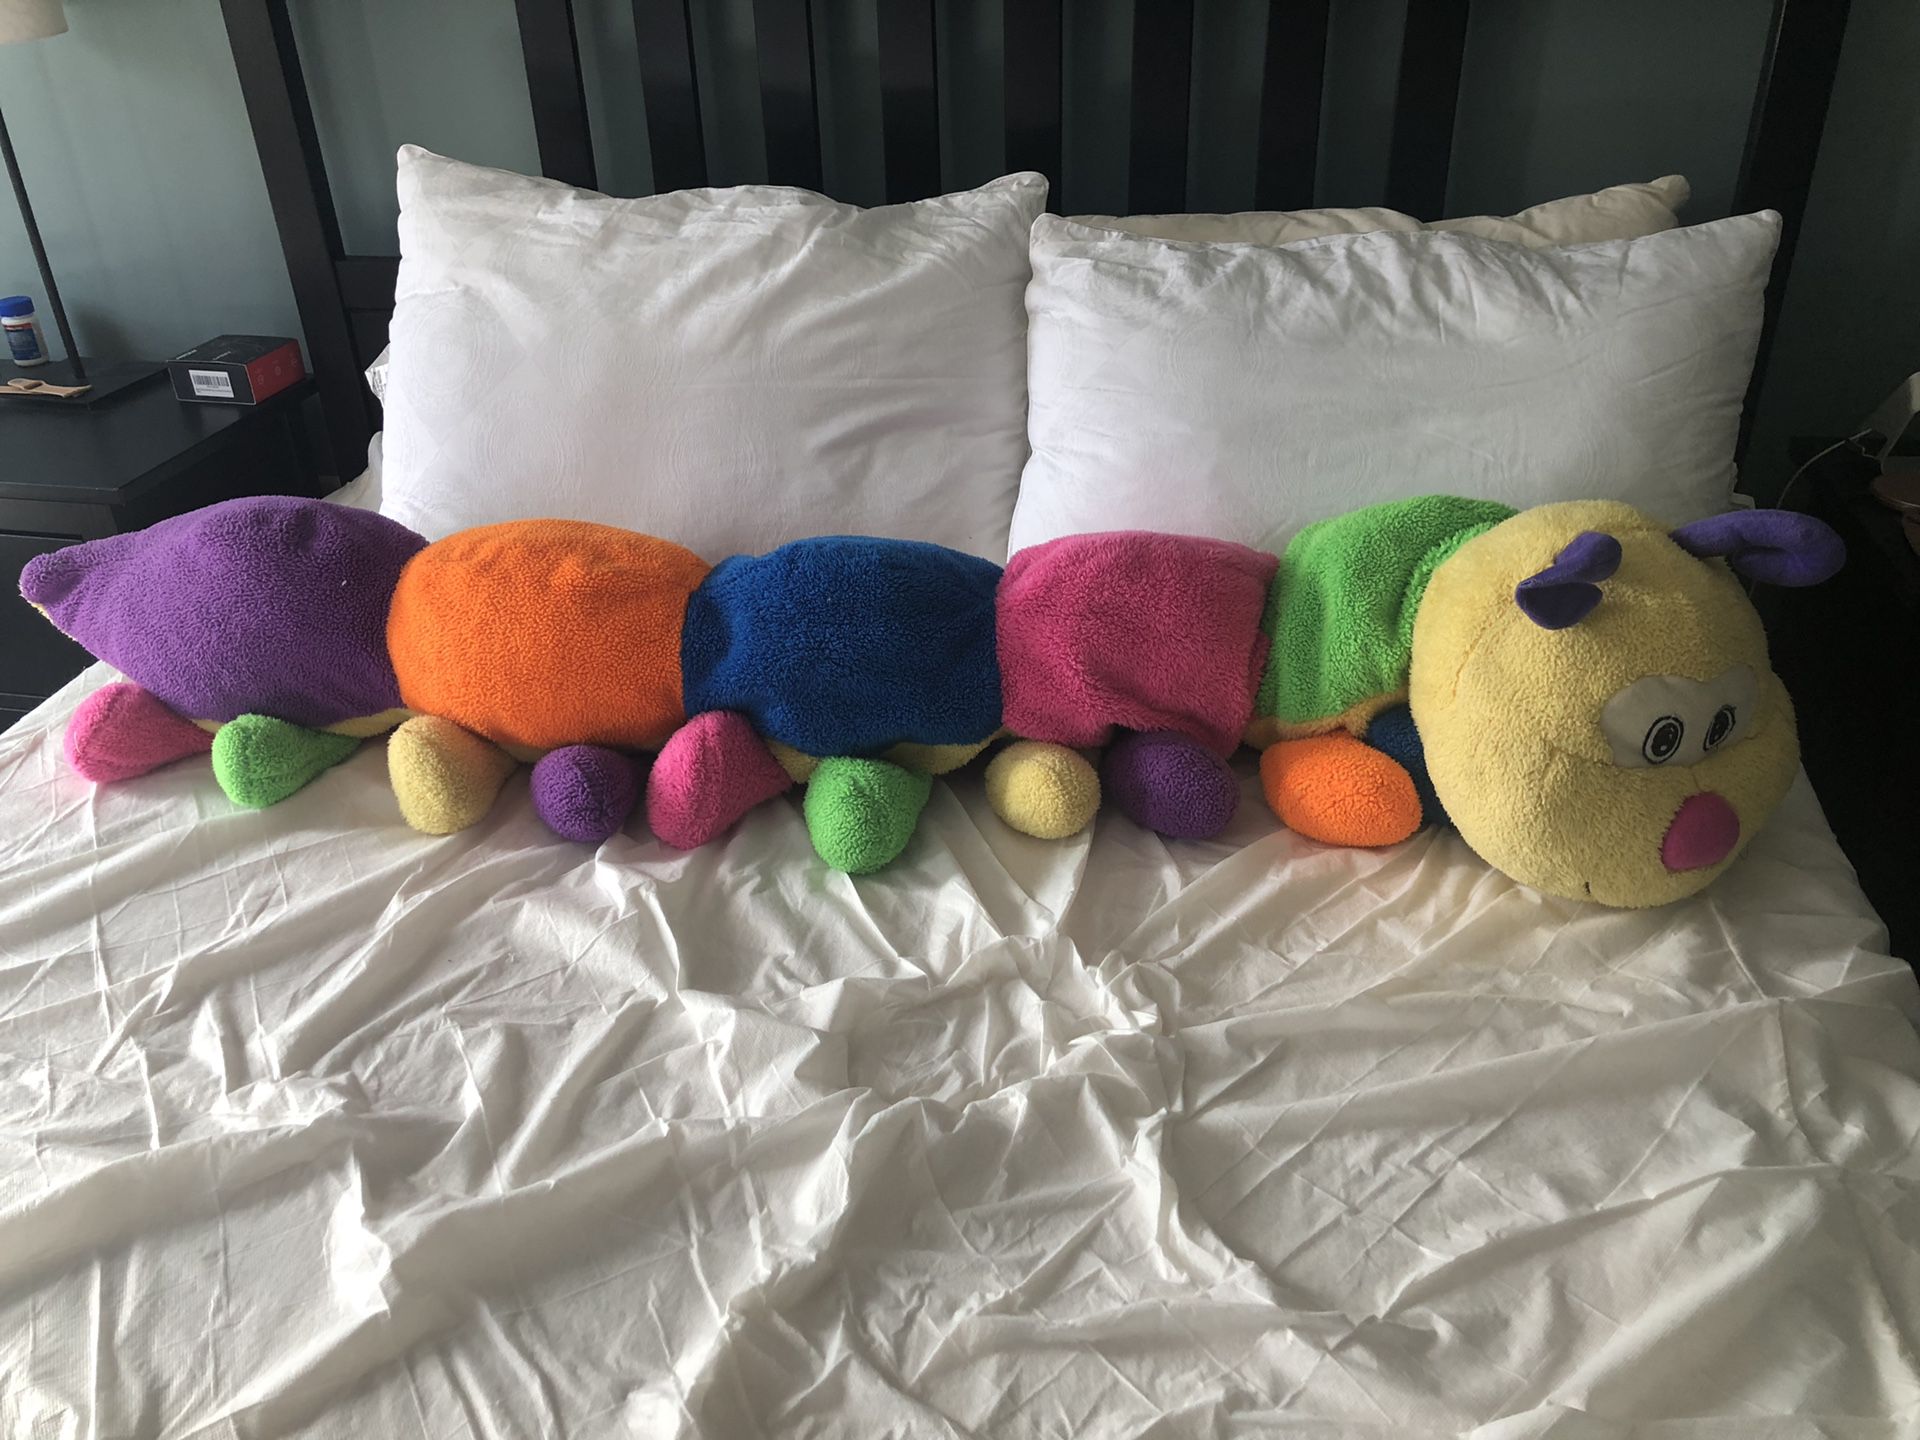 Giant stuffed animal caterpillar body pillow